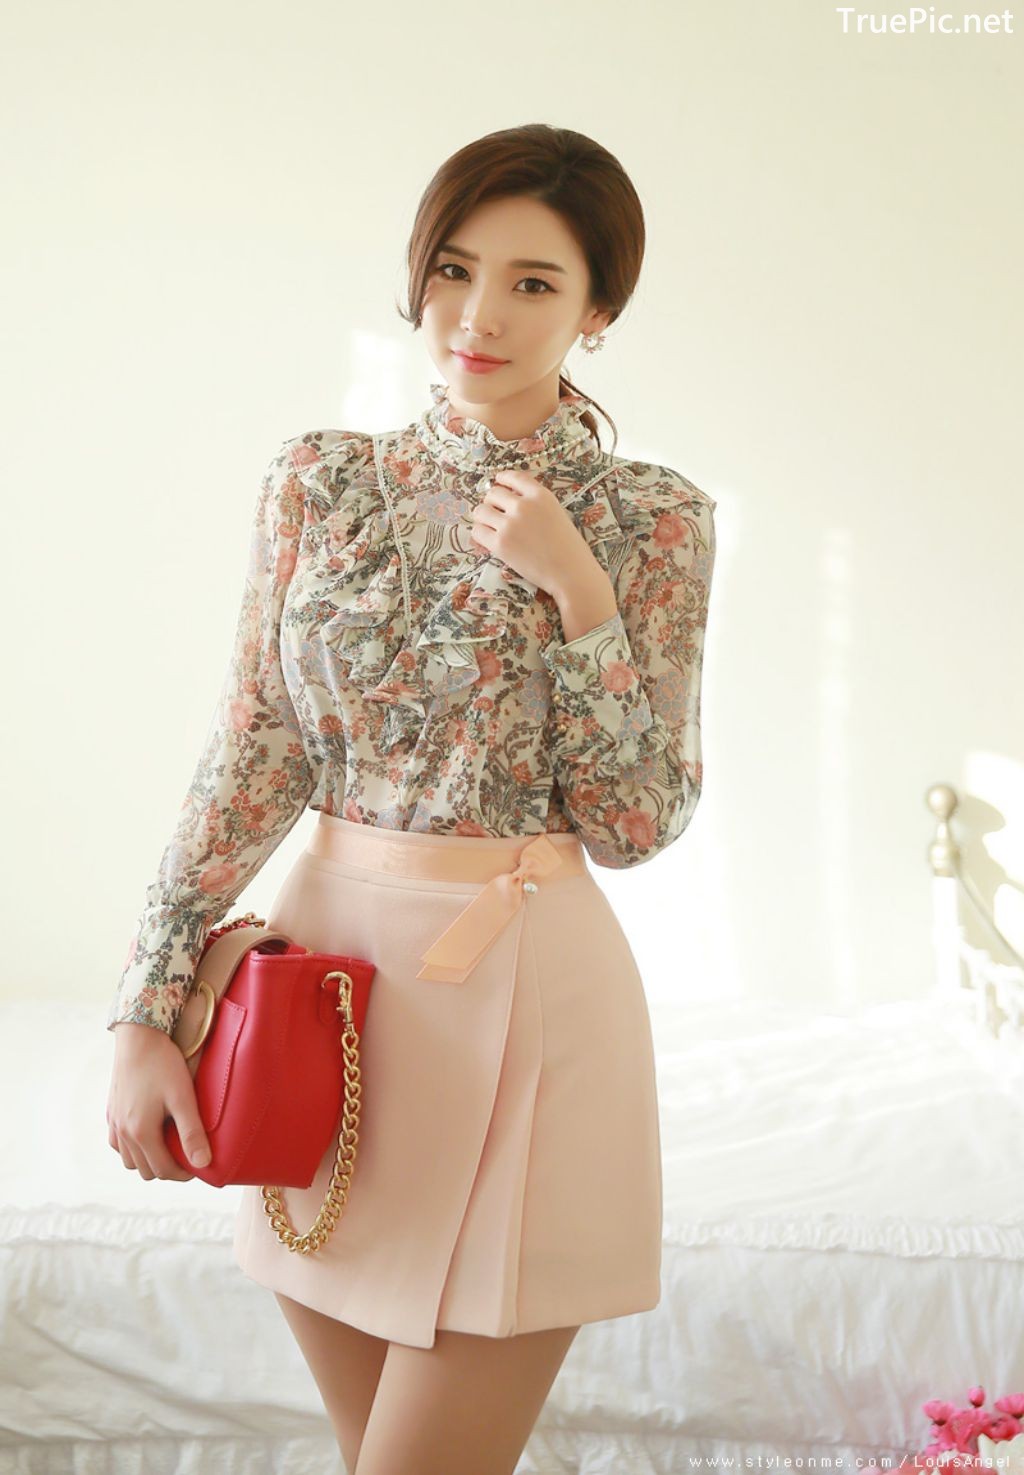 Image-Korean-Fashion-Model-Park-Da-Hyun-Office-Dress-Collection-TruePic.net- Picture-26